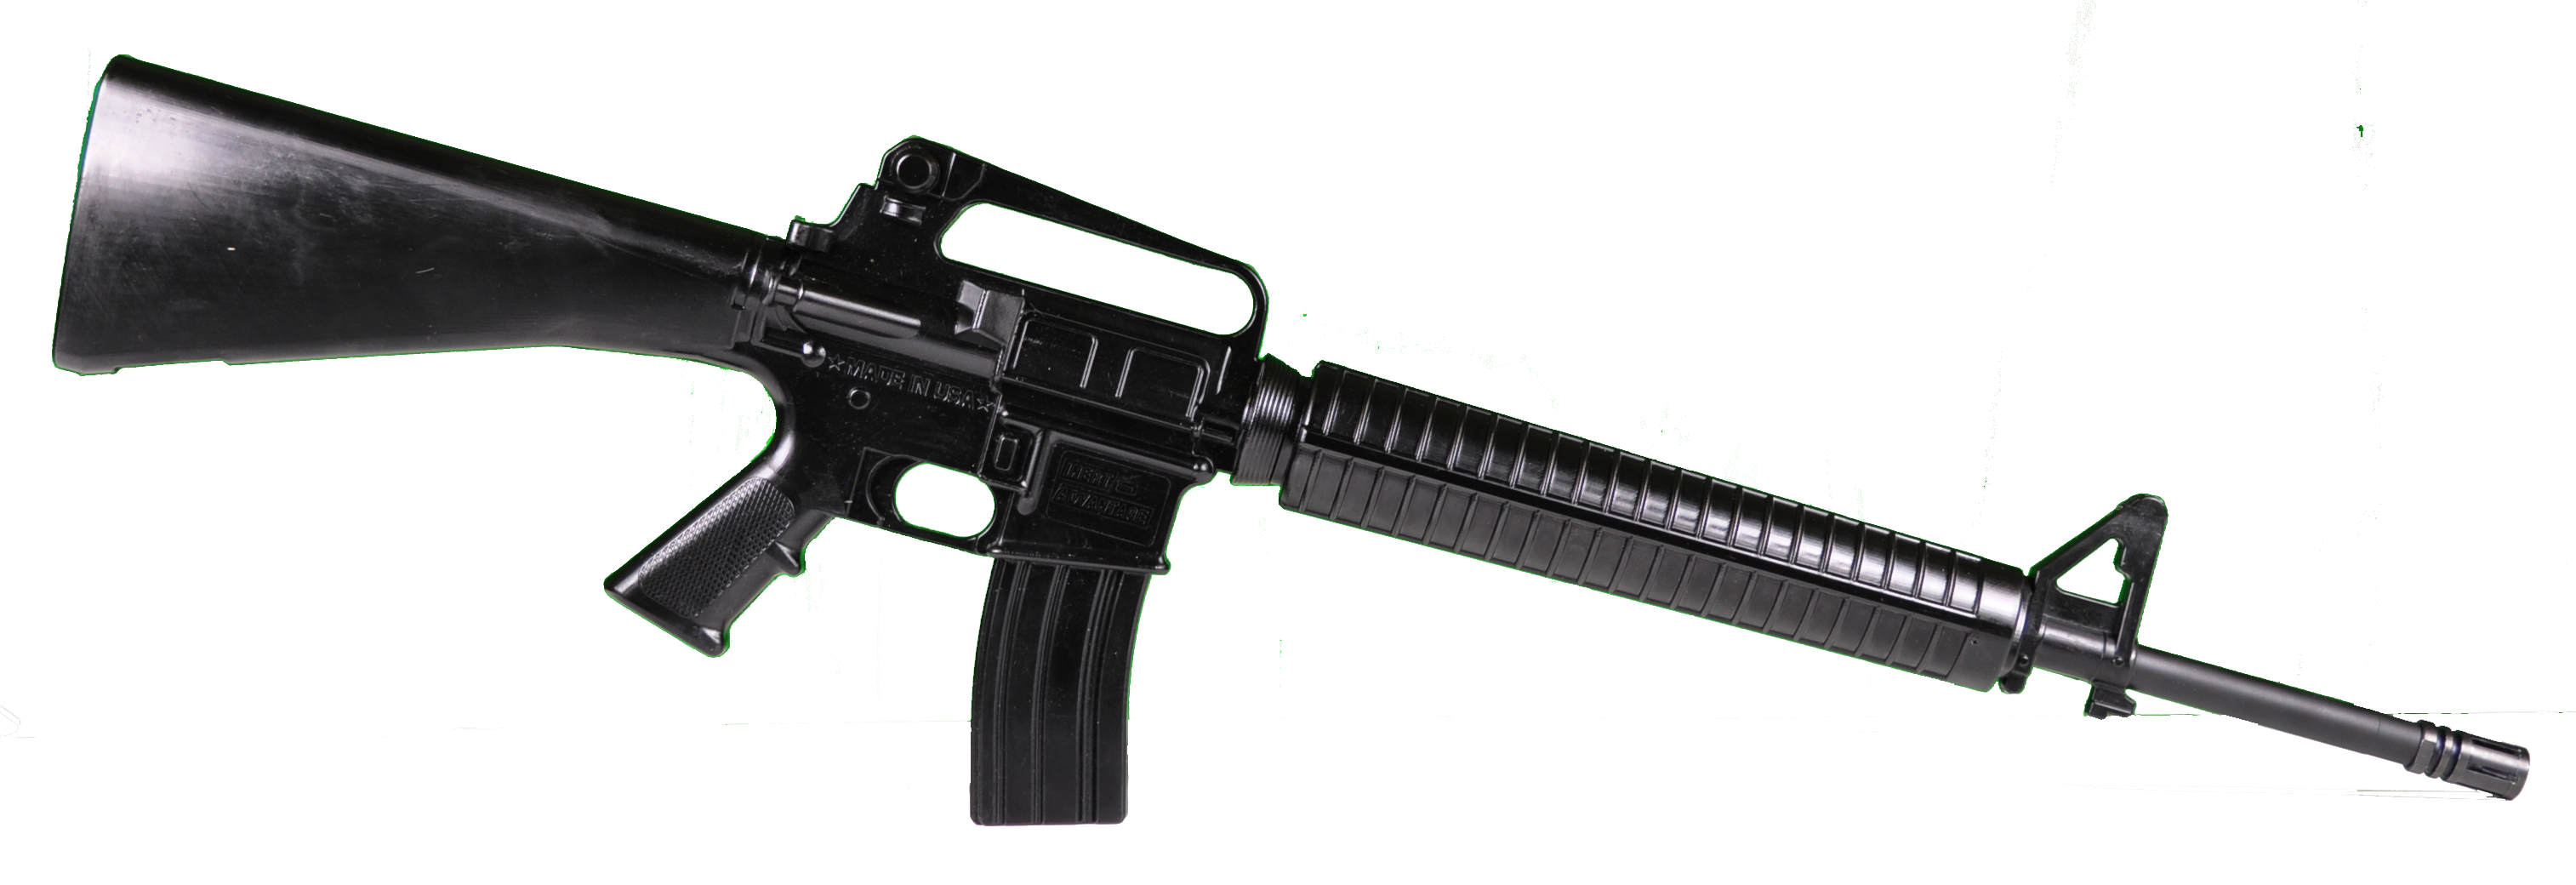 Assault Rifle Transparent Background